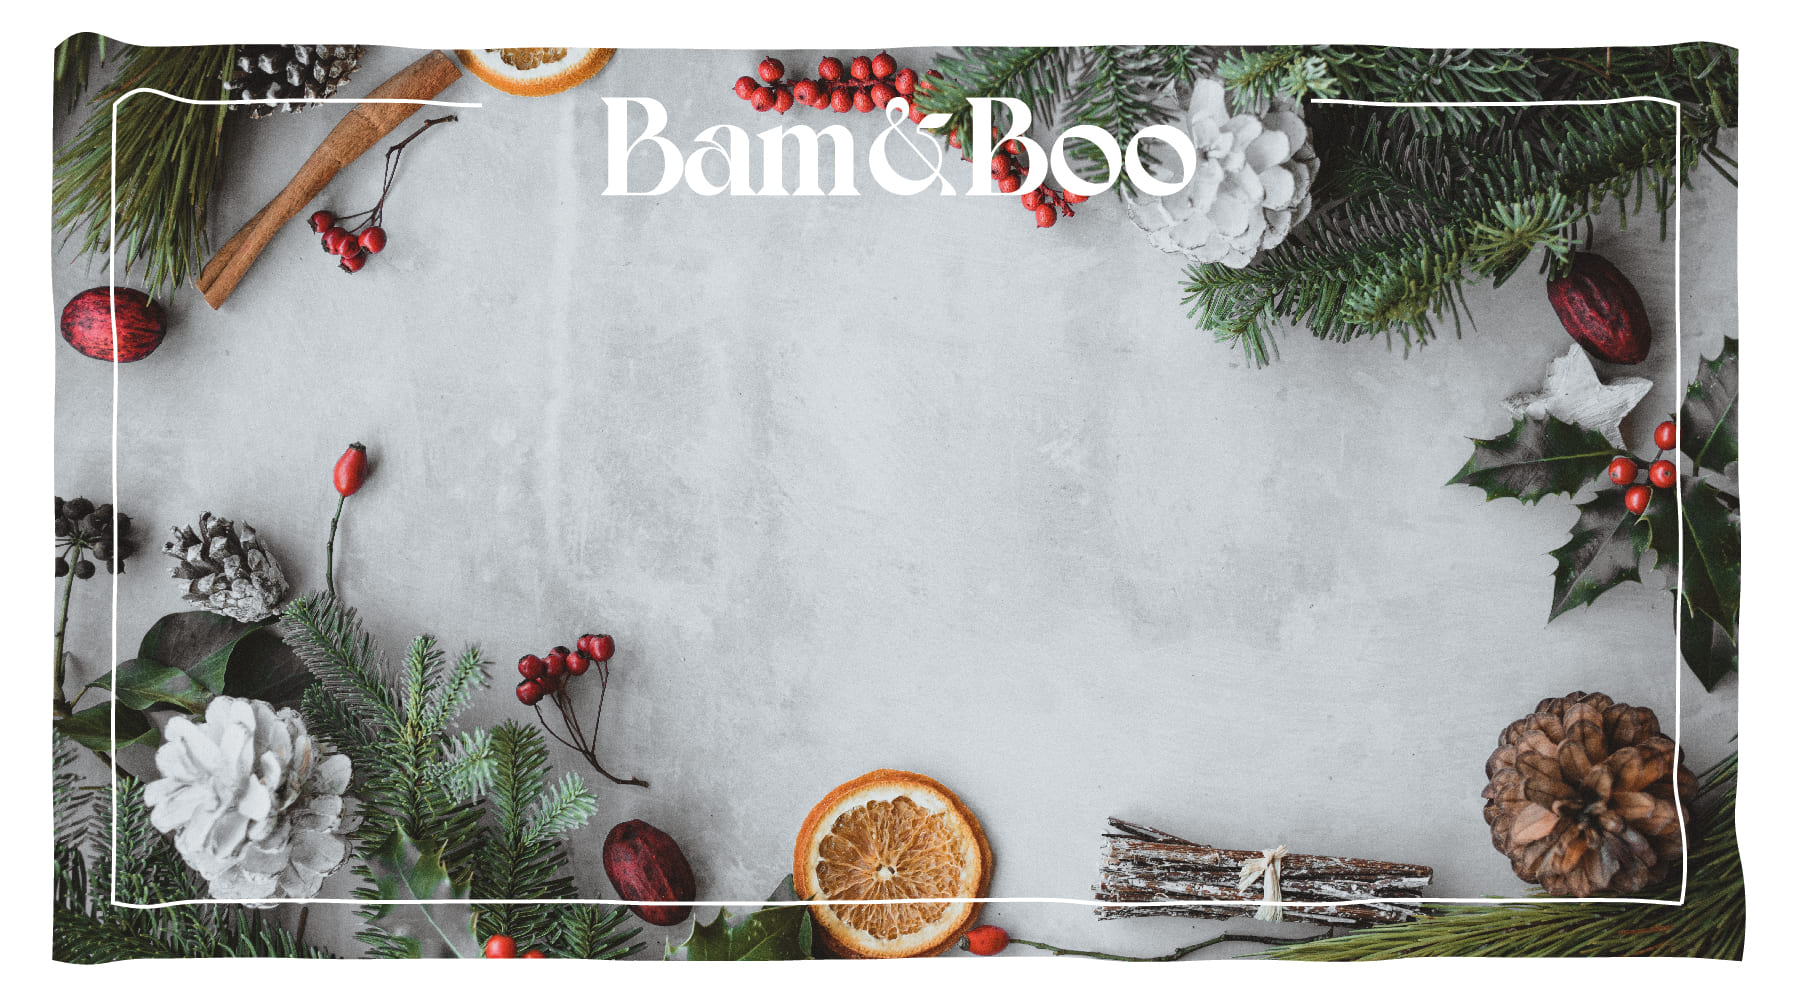 16 Ideas for a Sustainable Christmas - Bam&Boo